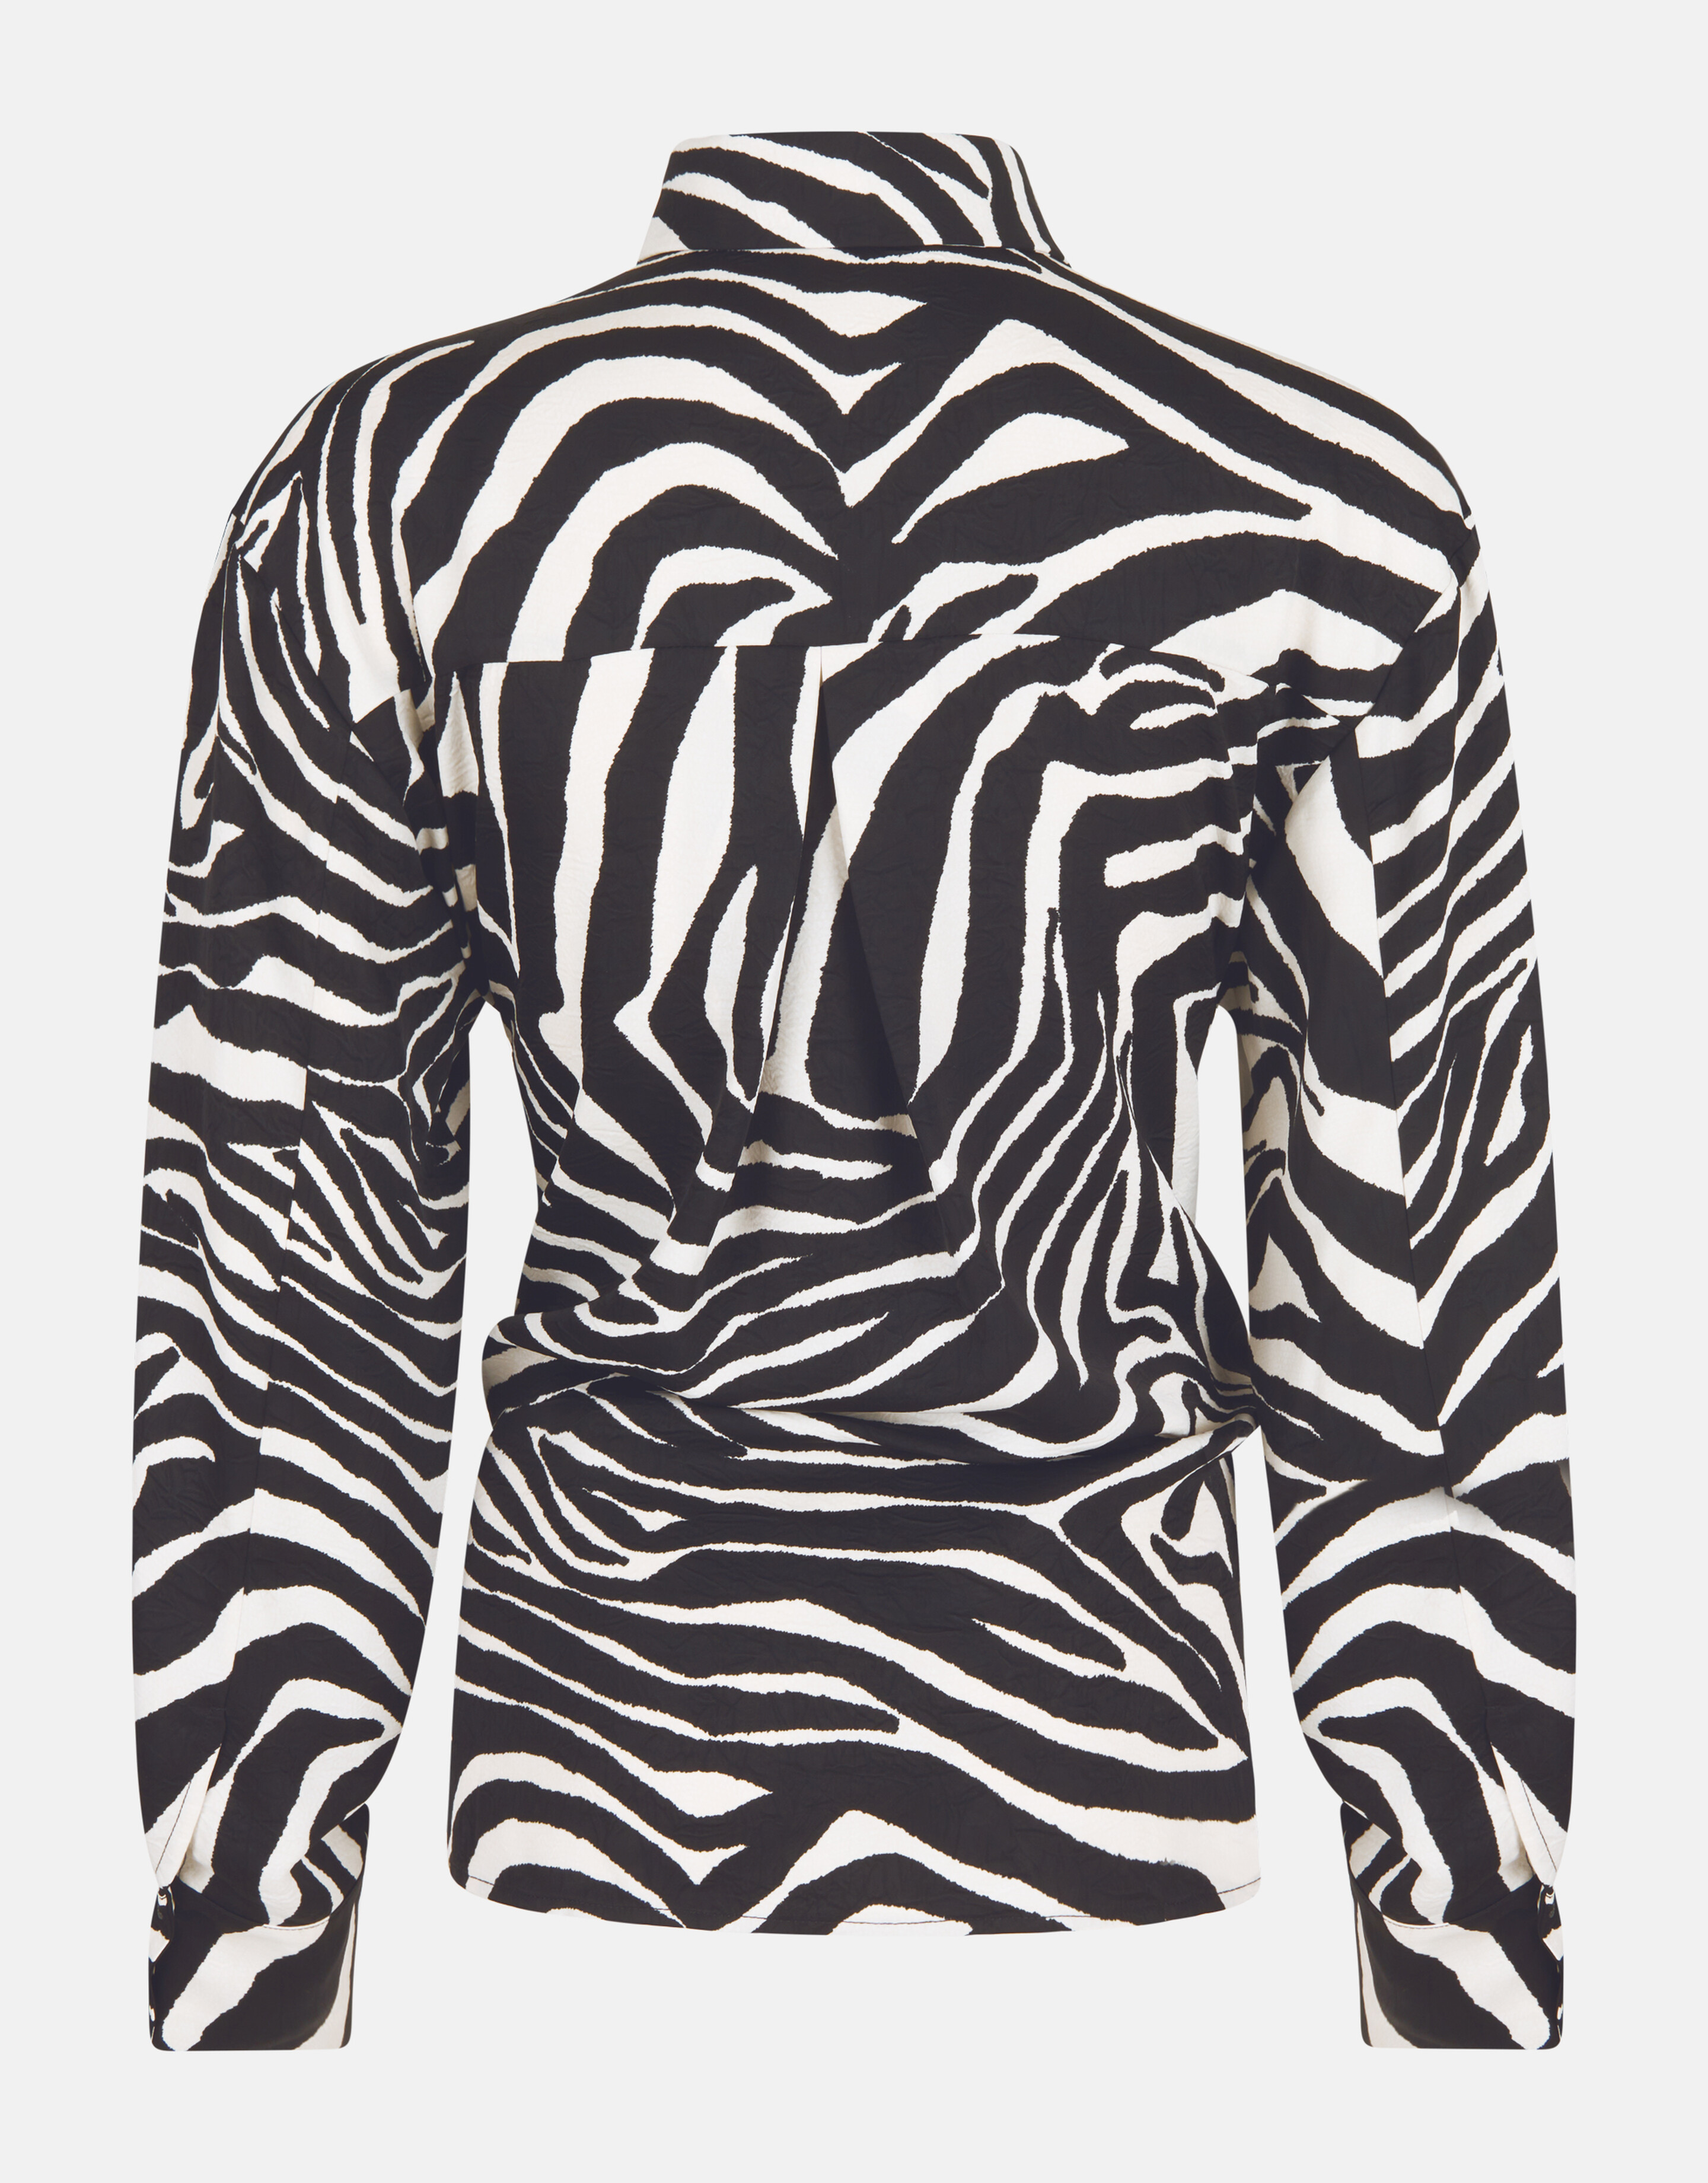 Zebra Print Blouse Zwart/Wit SHOEBY WOMEN